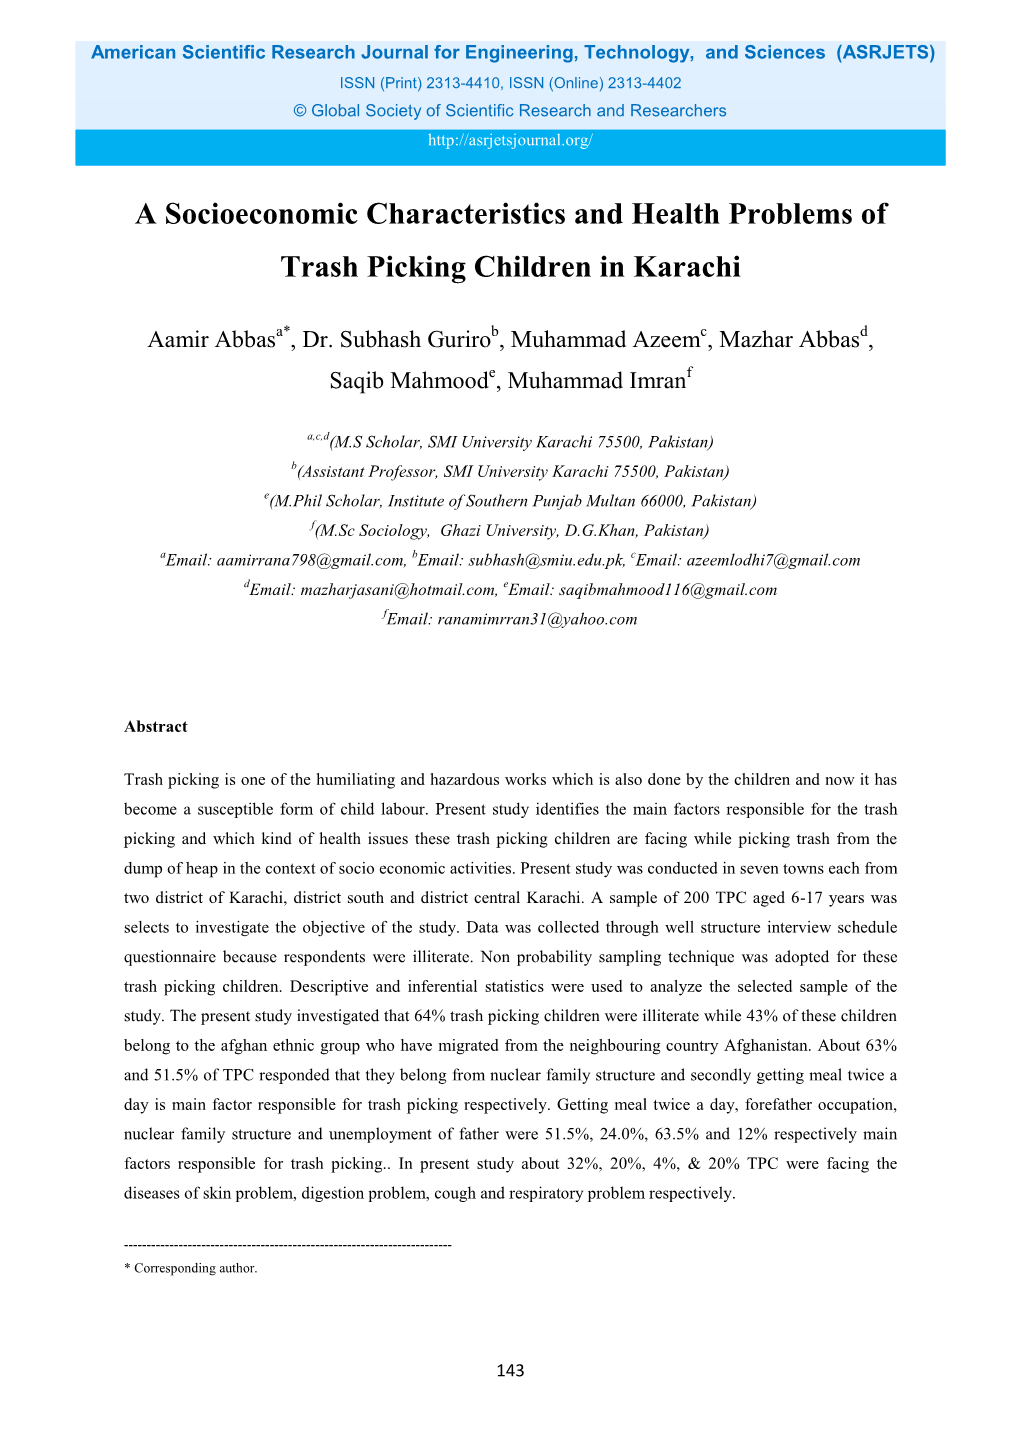 A Socioeconomic Characteristics and Health Problems of Trash Picking Children in Karachi